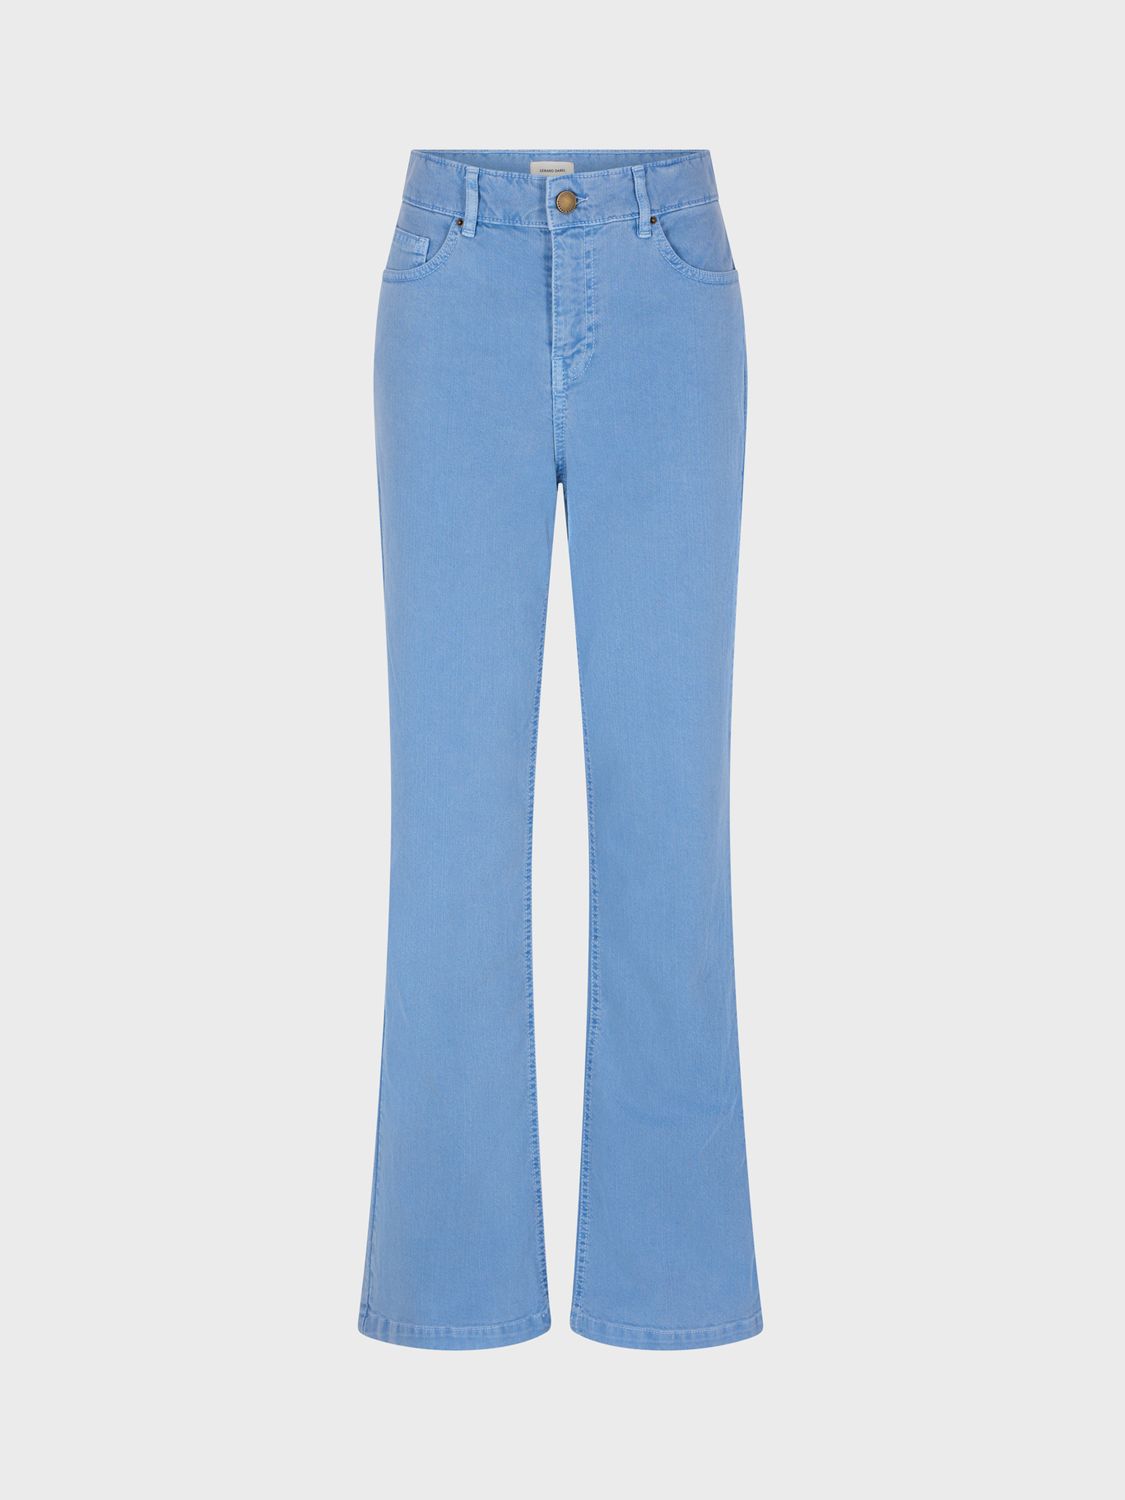 Gerard Darel Carell Cotton Blend Jeans, Blue, 12